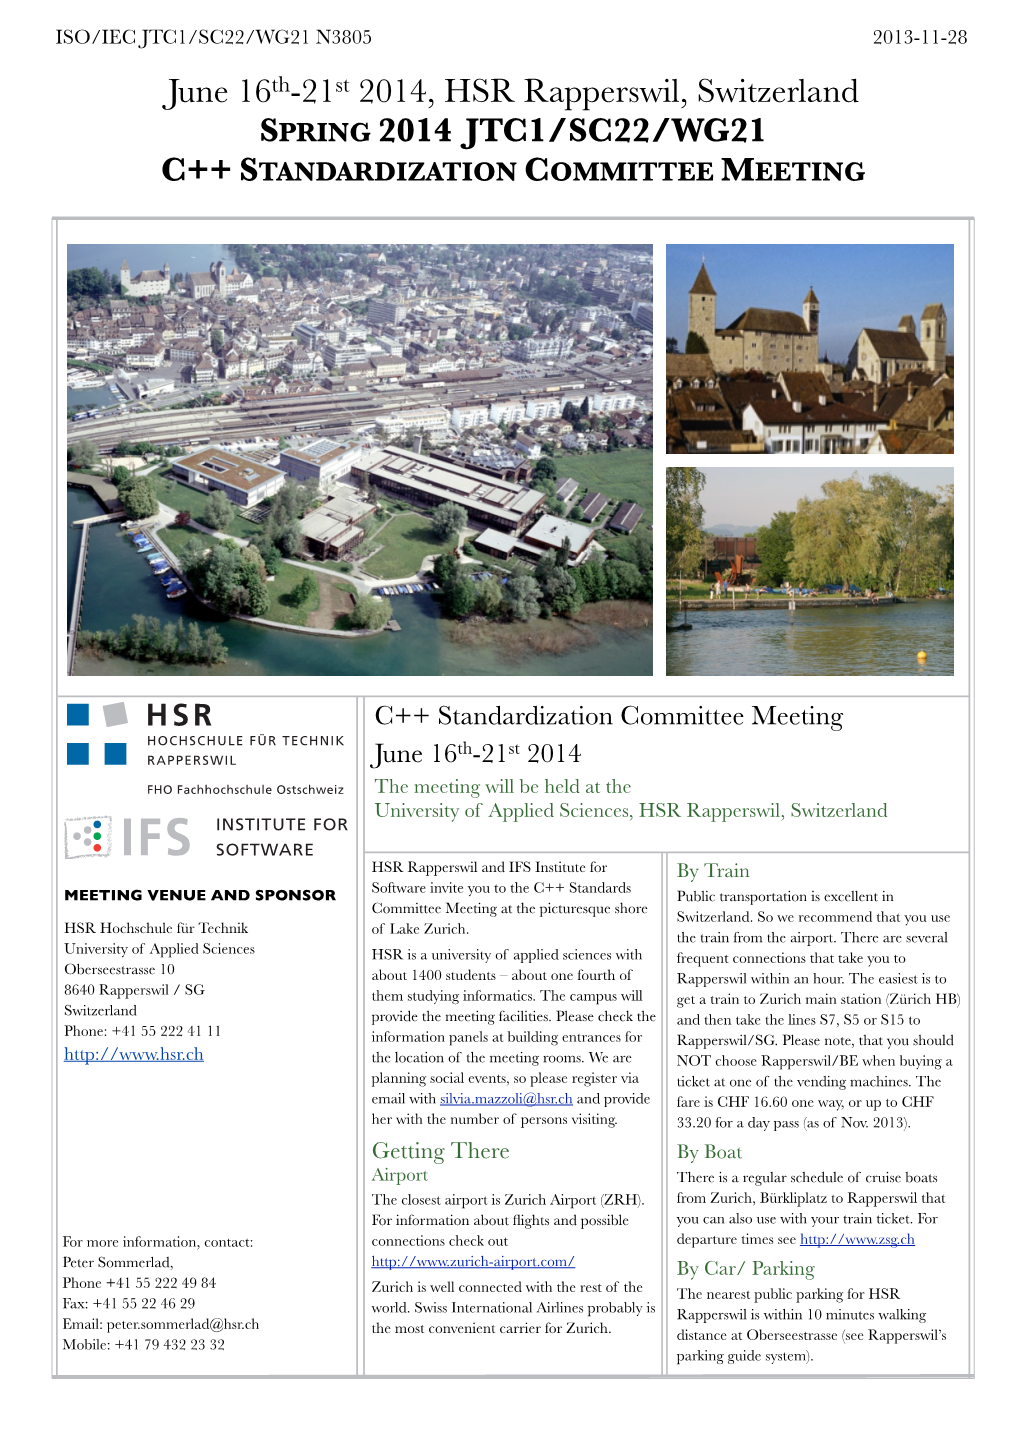 June 16Th-21St 2014, HSR Rapperswil, Switzerland SPRING 2014 JTC1/SC22/WG21 C++ STANDARDIZATION COMMITTEE MEETING